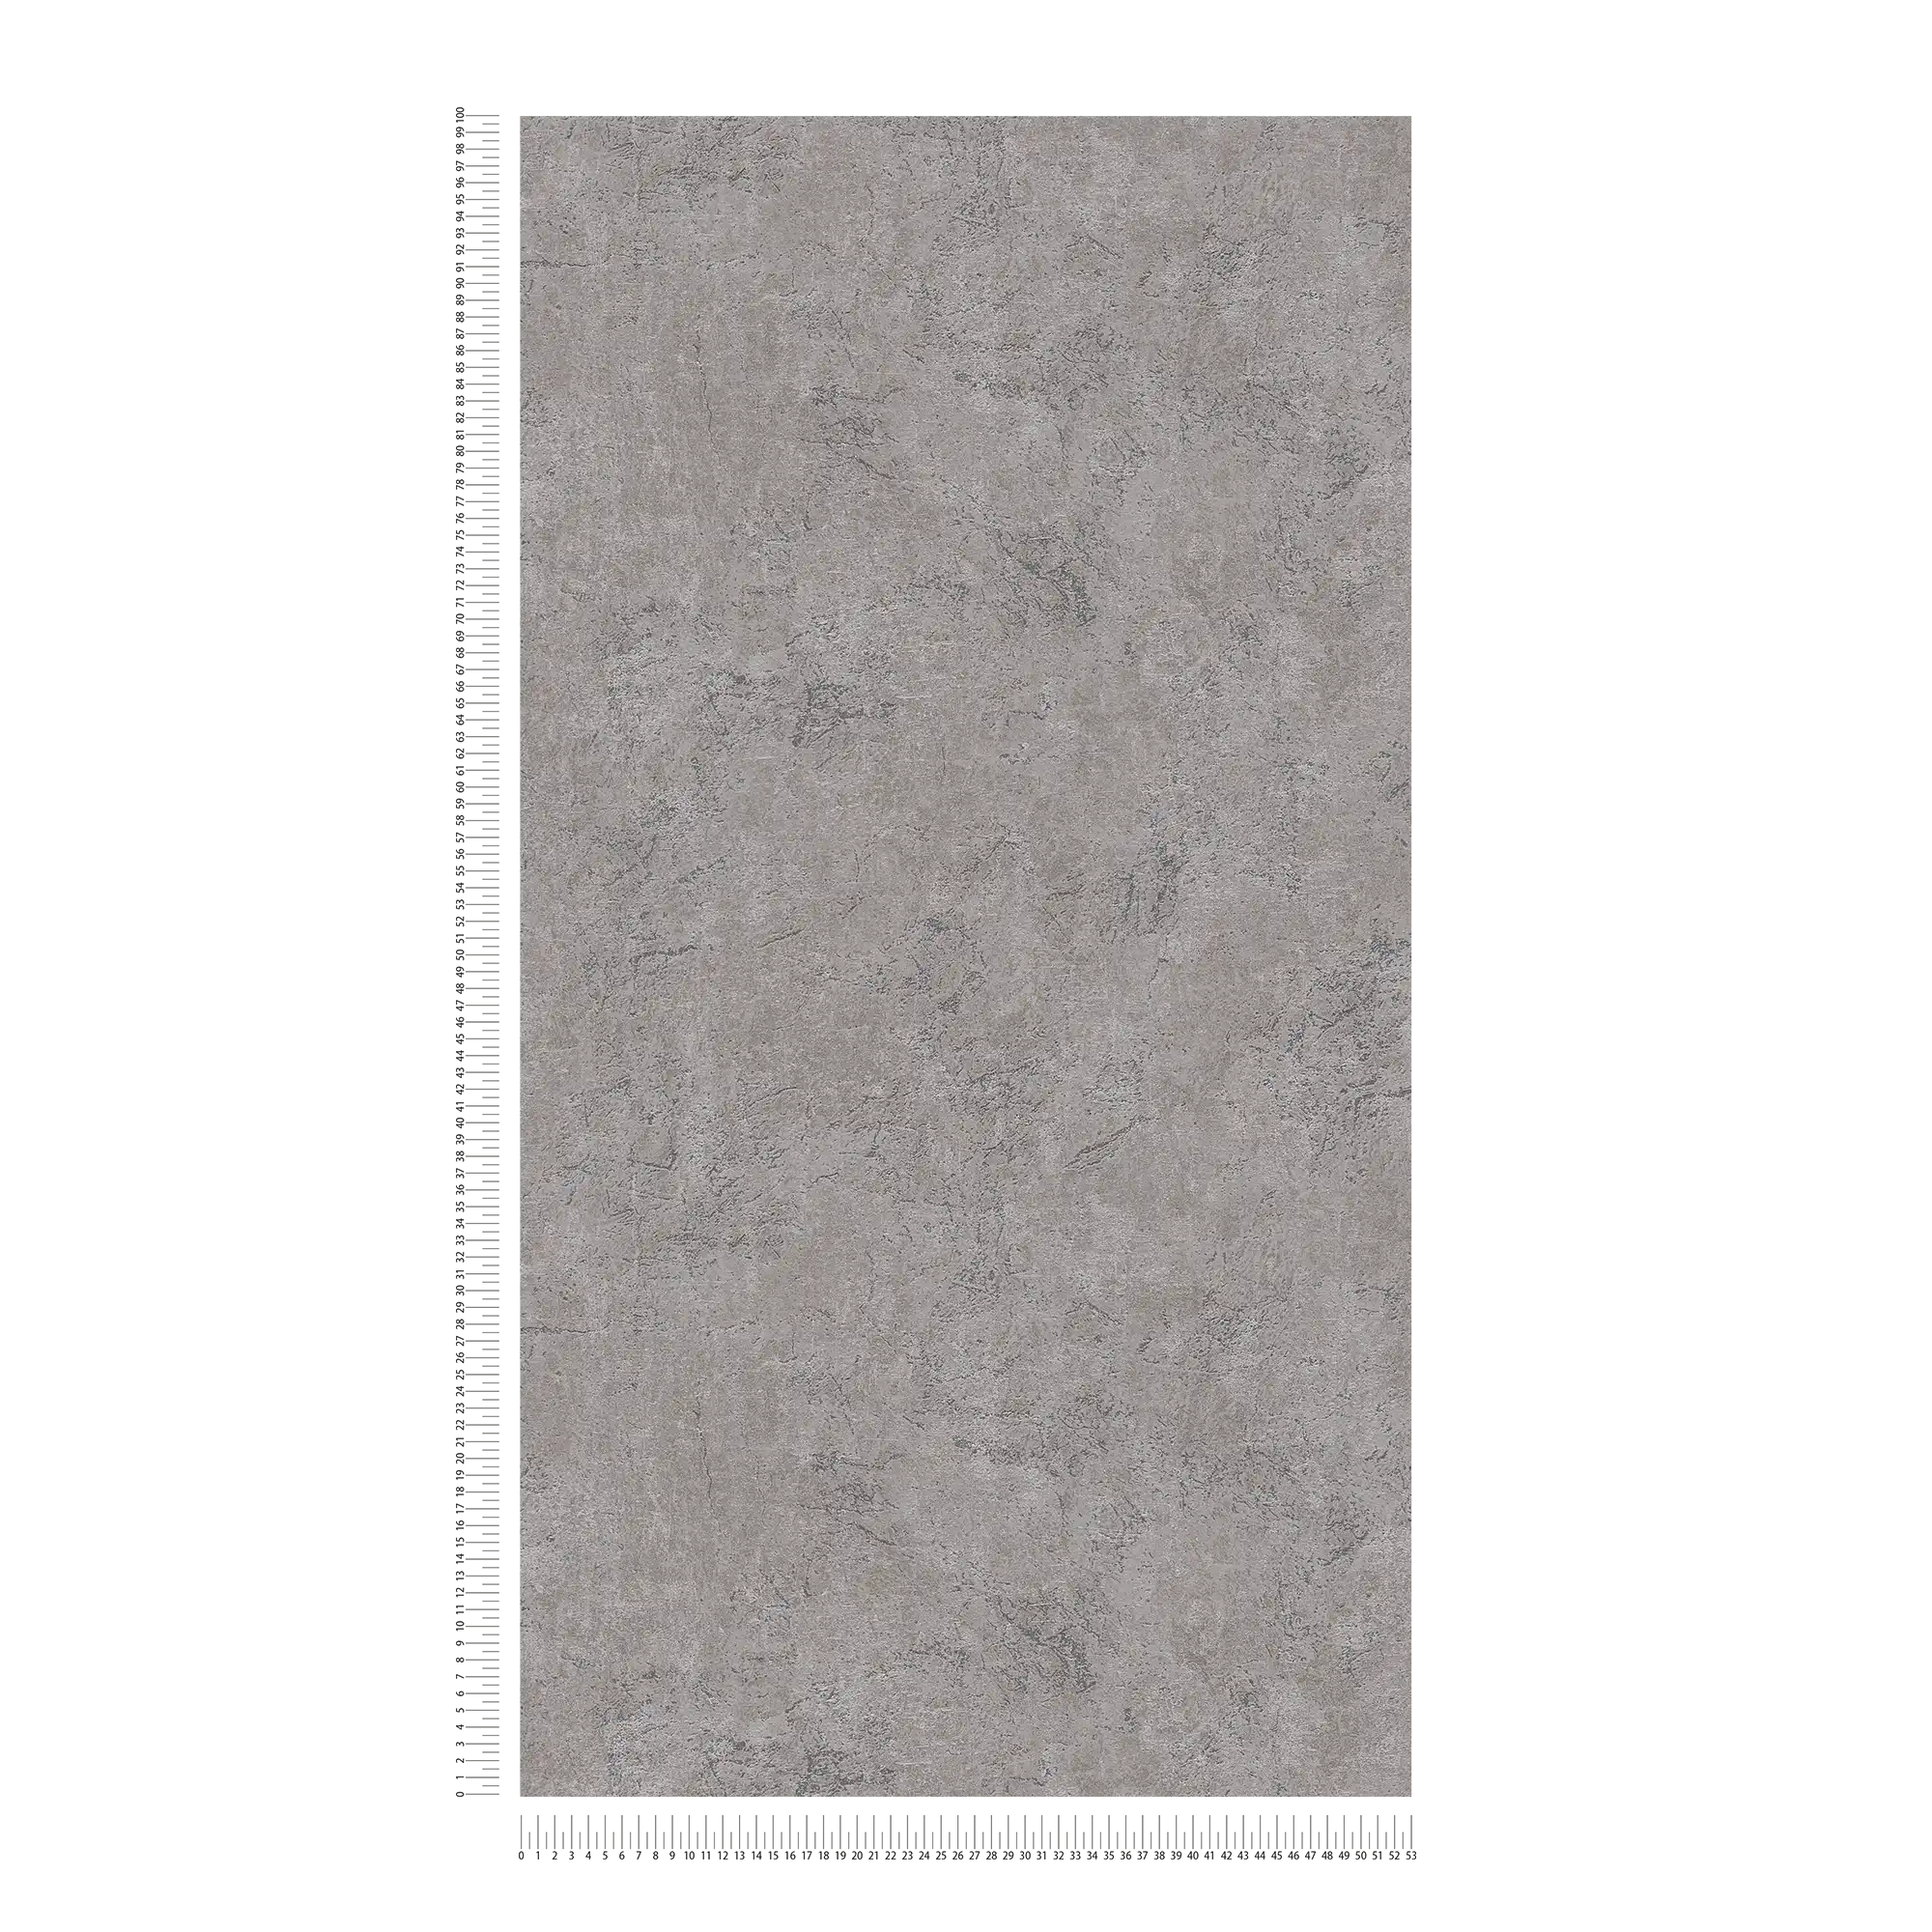             Non-woven wallpaper concrete effect with structure design
        